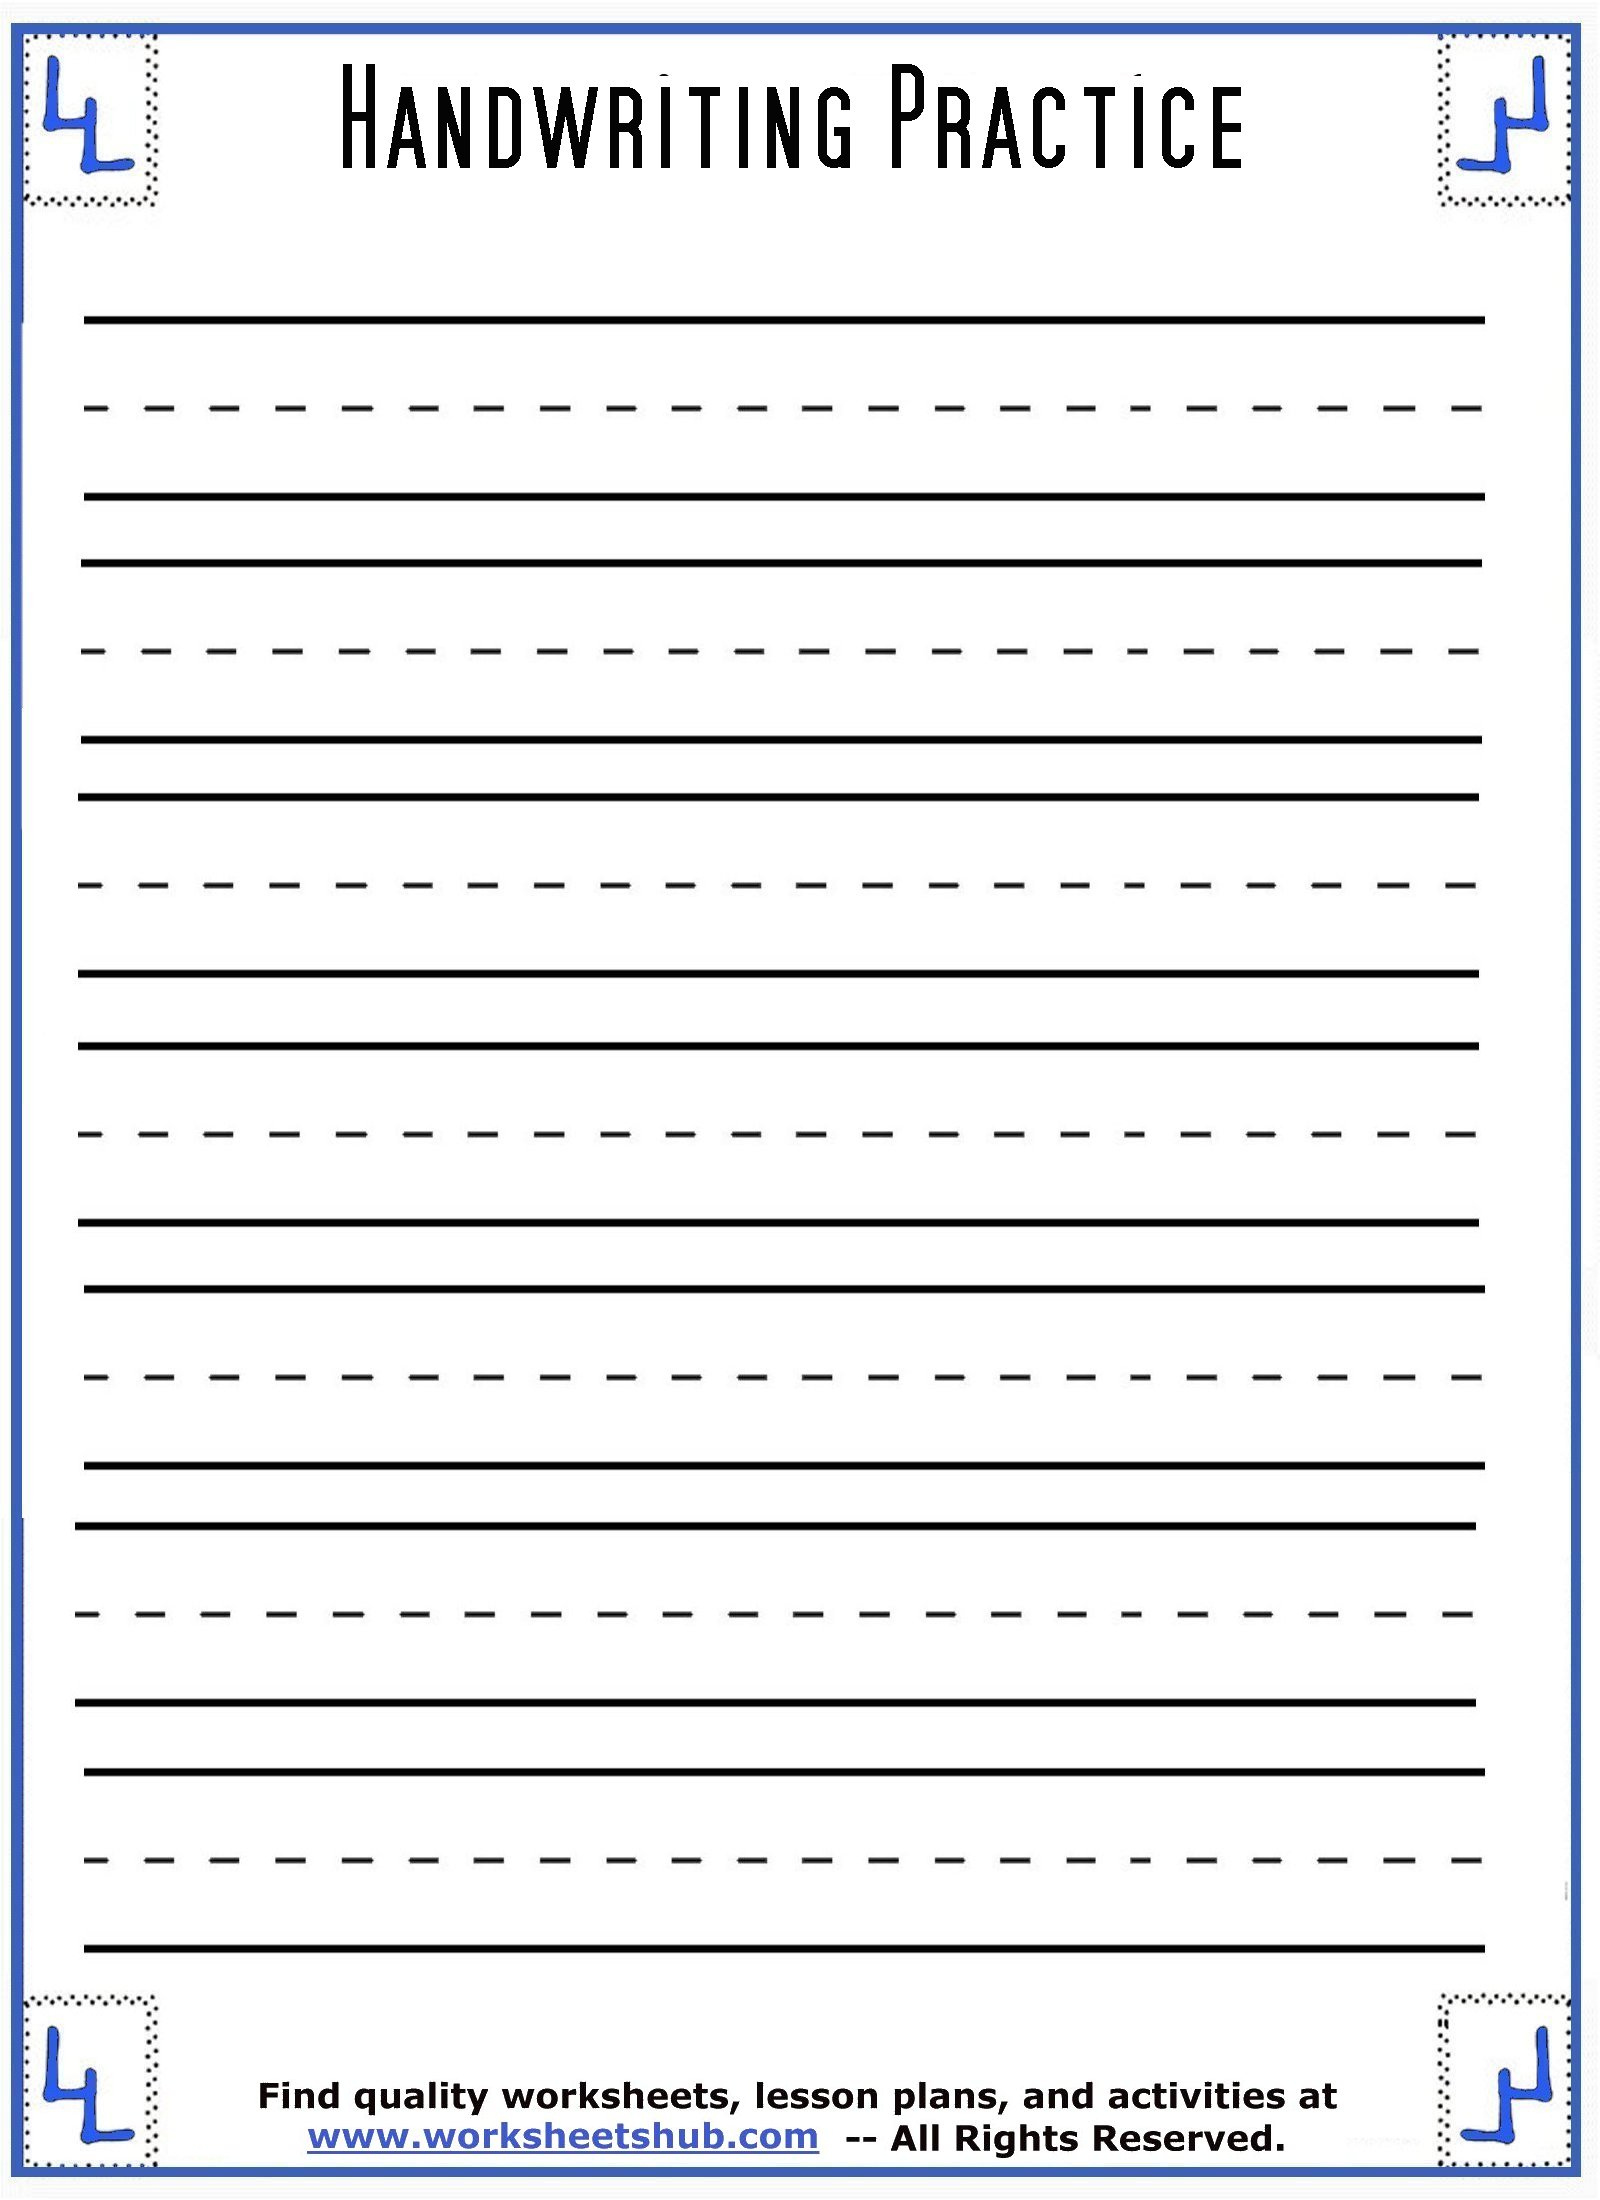 free-handwriting-worksheets-for-3rd-grade-handwriting-worksheets